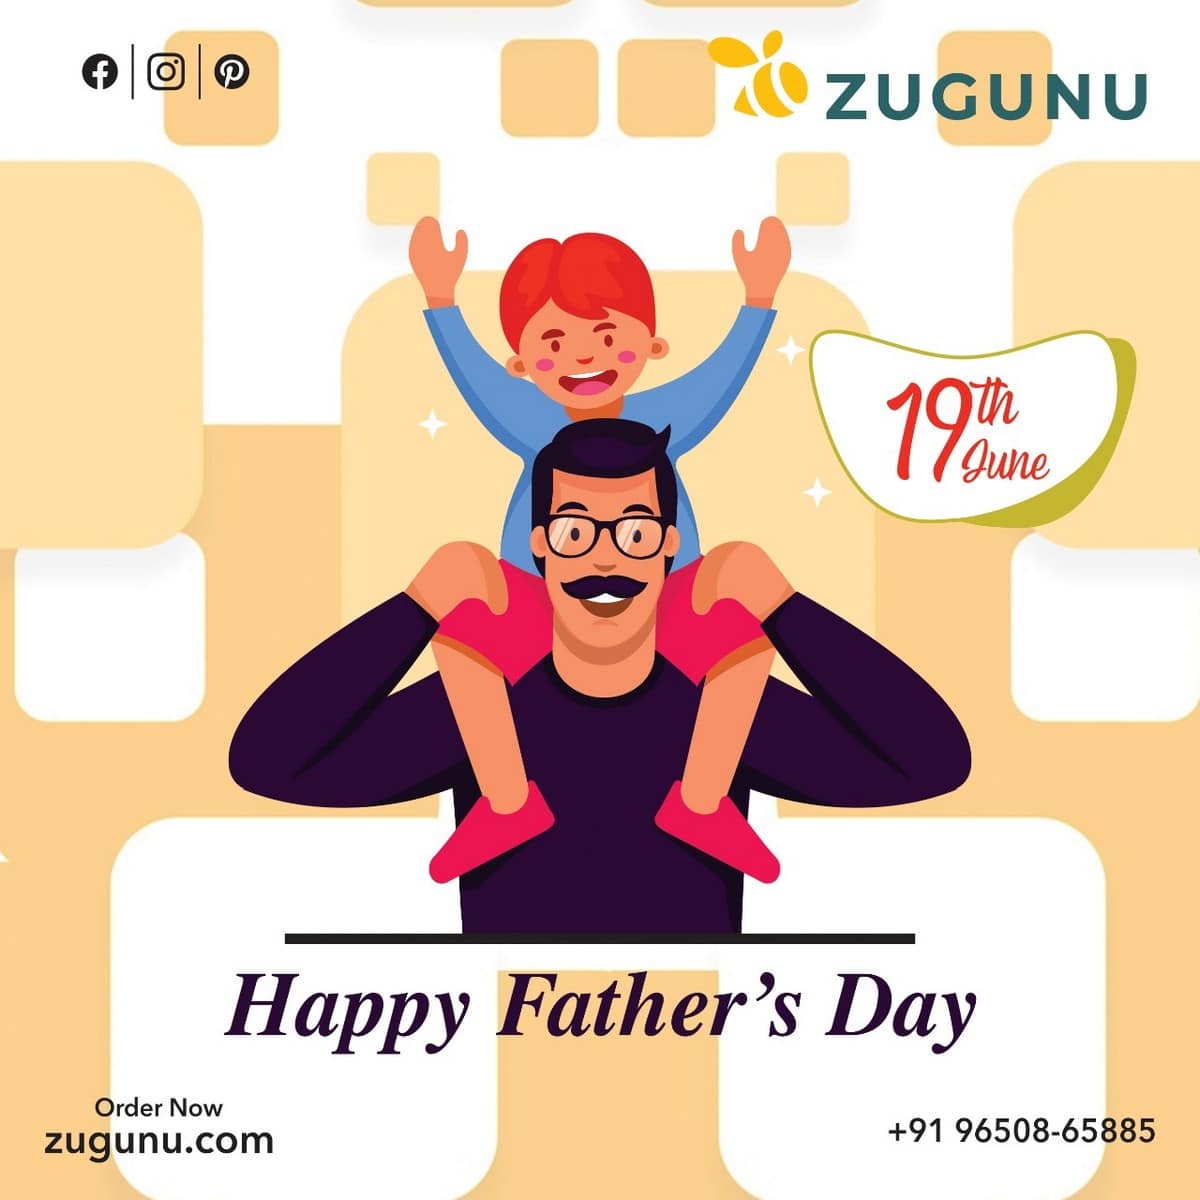 Zugunu Wishes You All A Very Happy Fathers Day